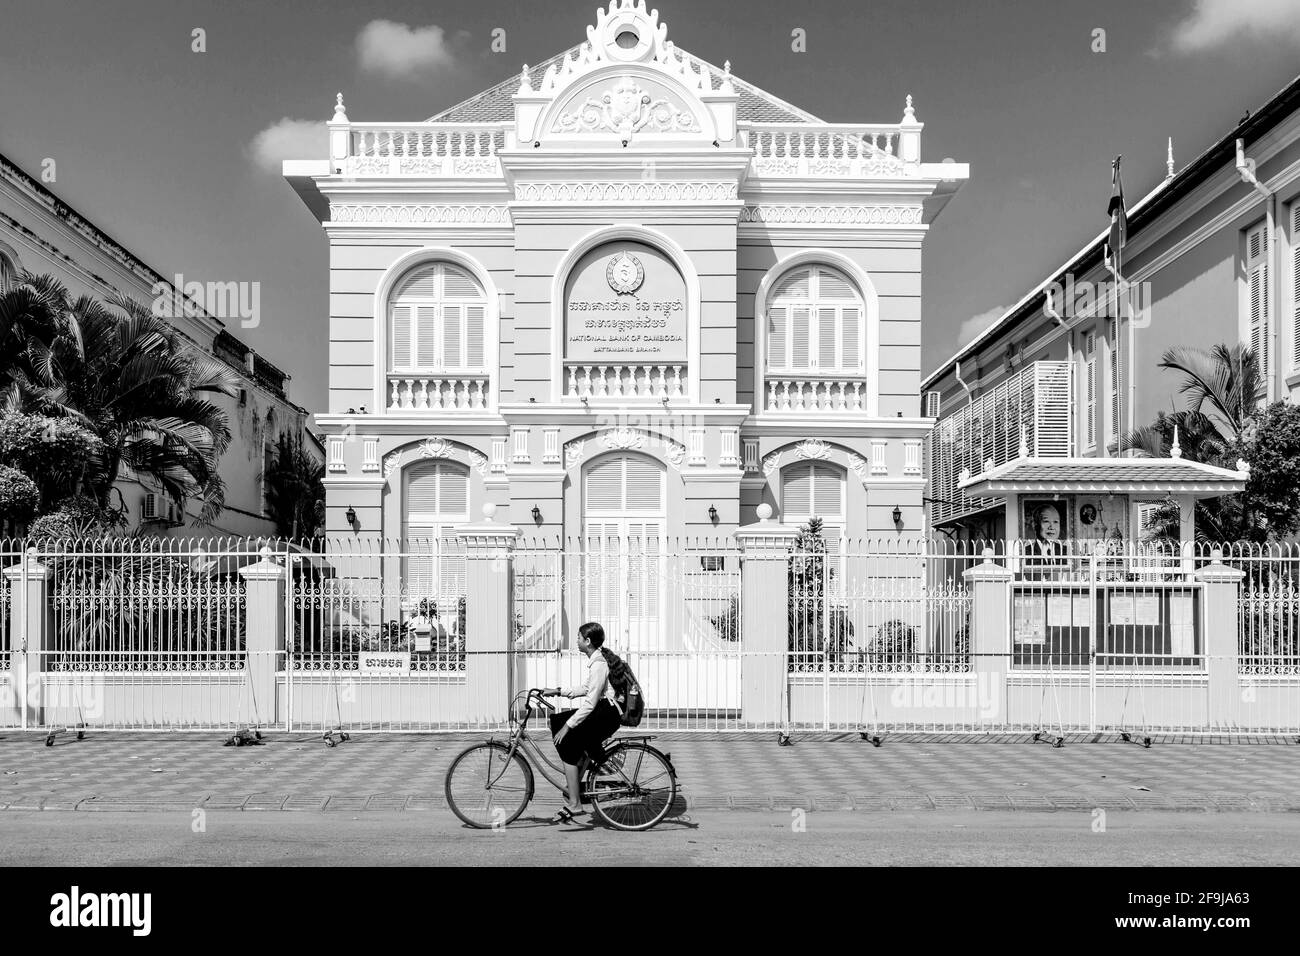 Colonial Era Buildings, Battambang, Cambodia. Stock Photo